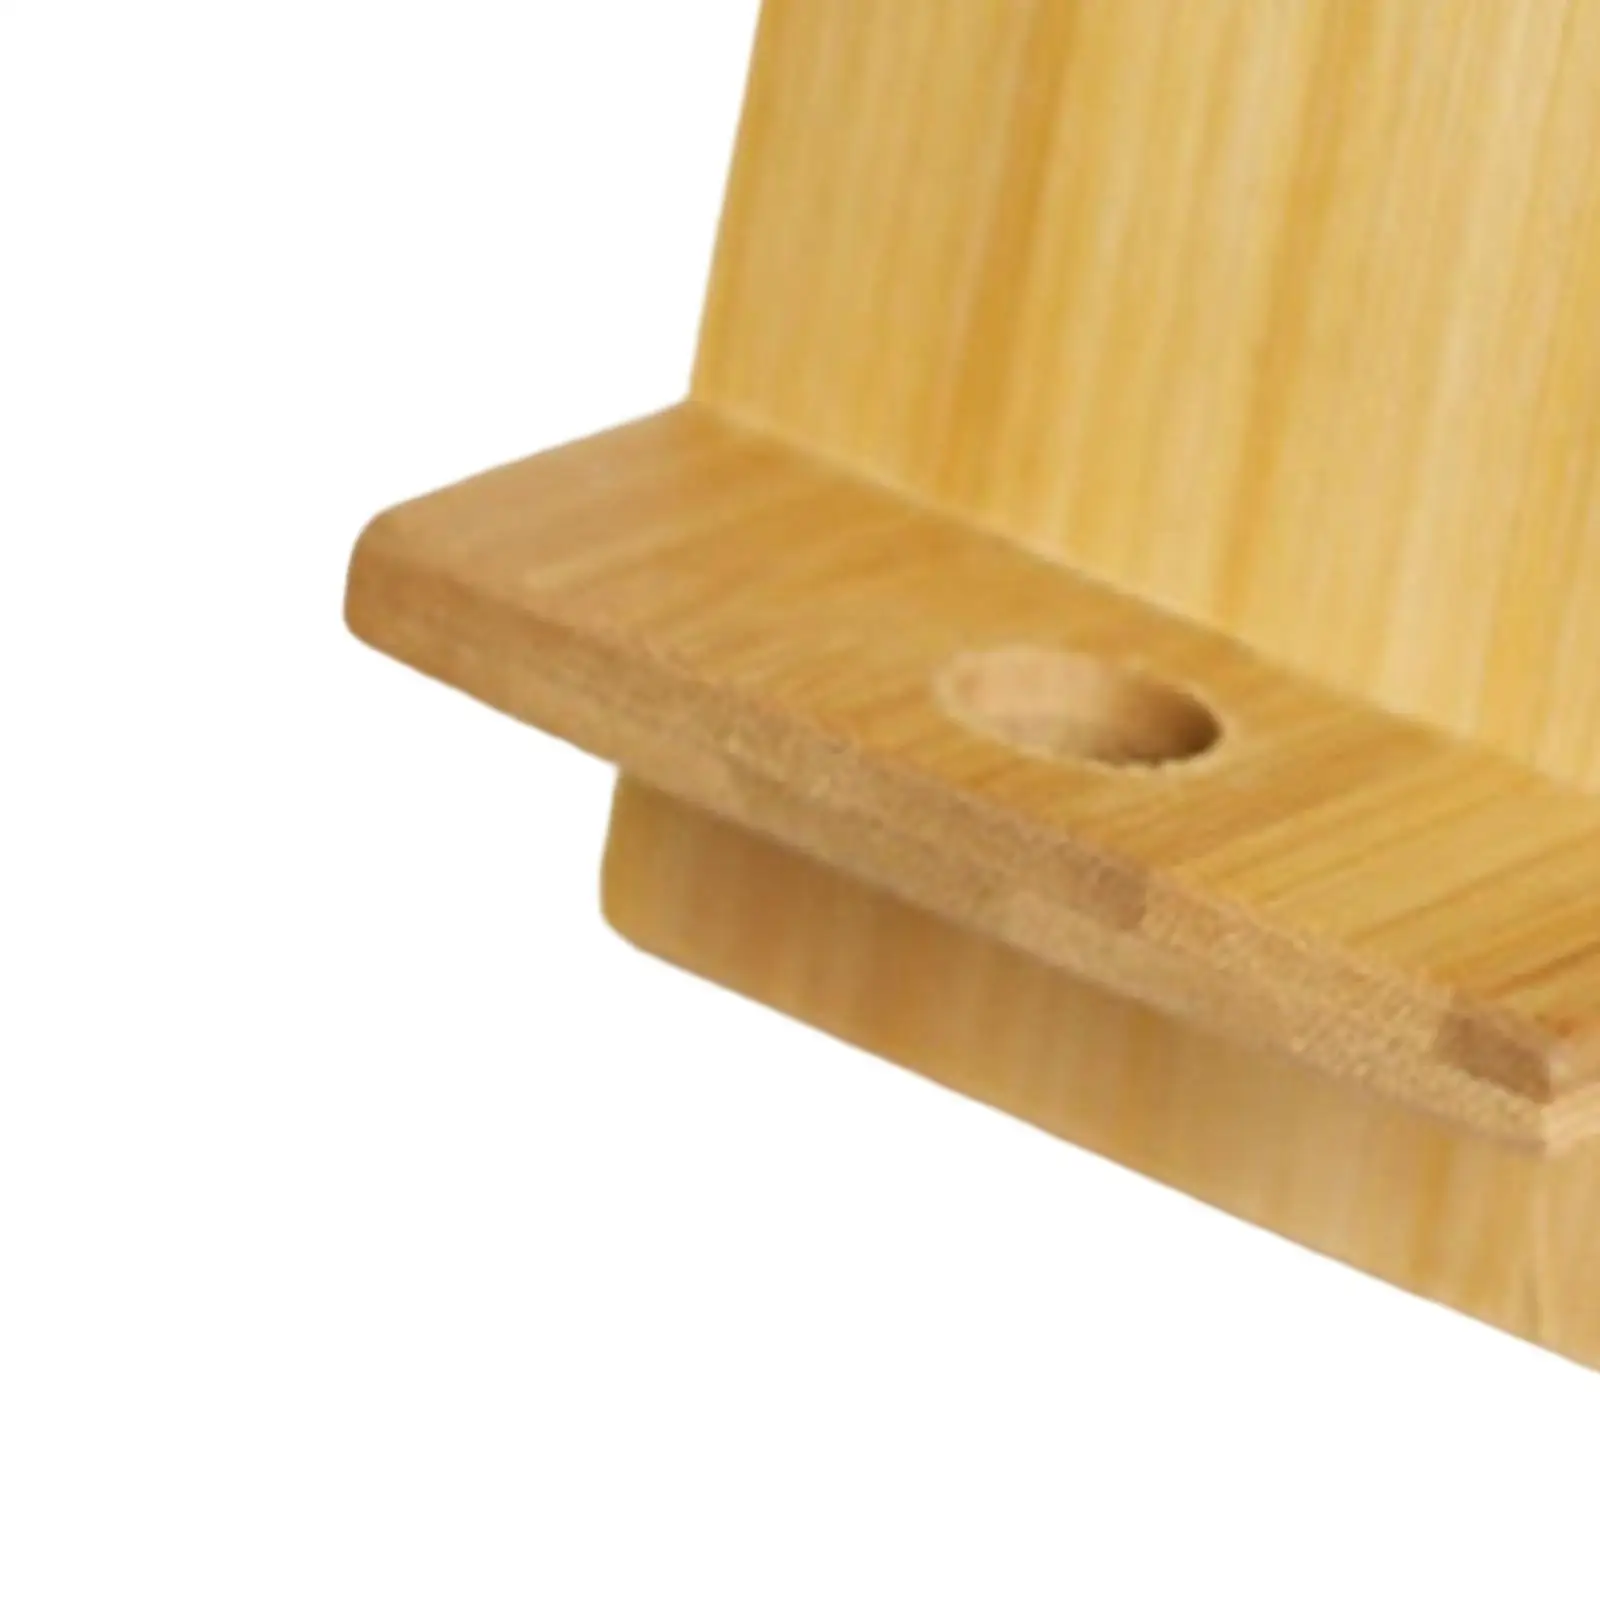 Detachable bamboo Phone Holder Tablet Stand Desk Dock Cradle for Bedroom Travel Fine Craftsmanship Accessory Durable